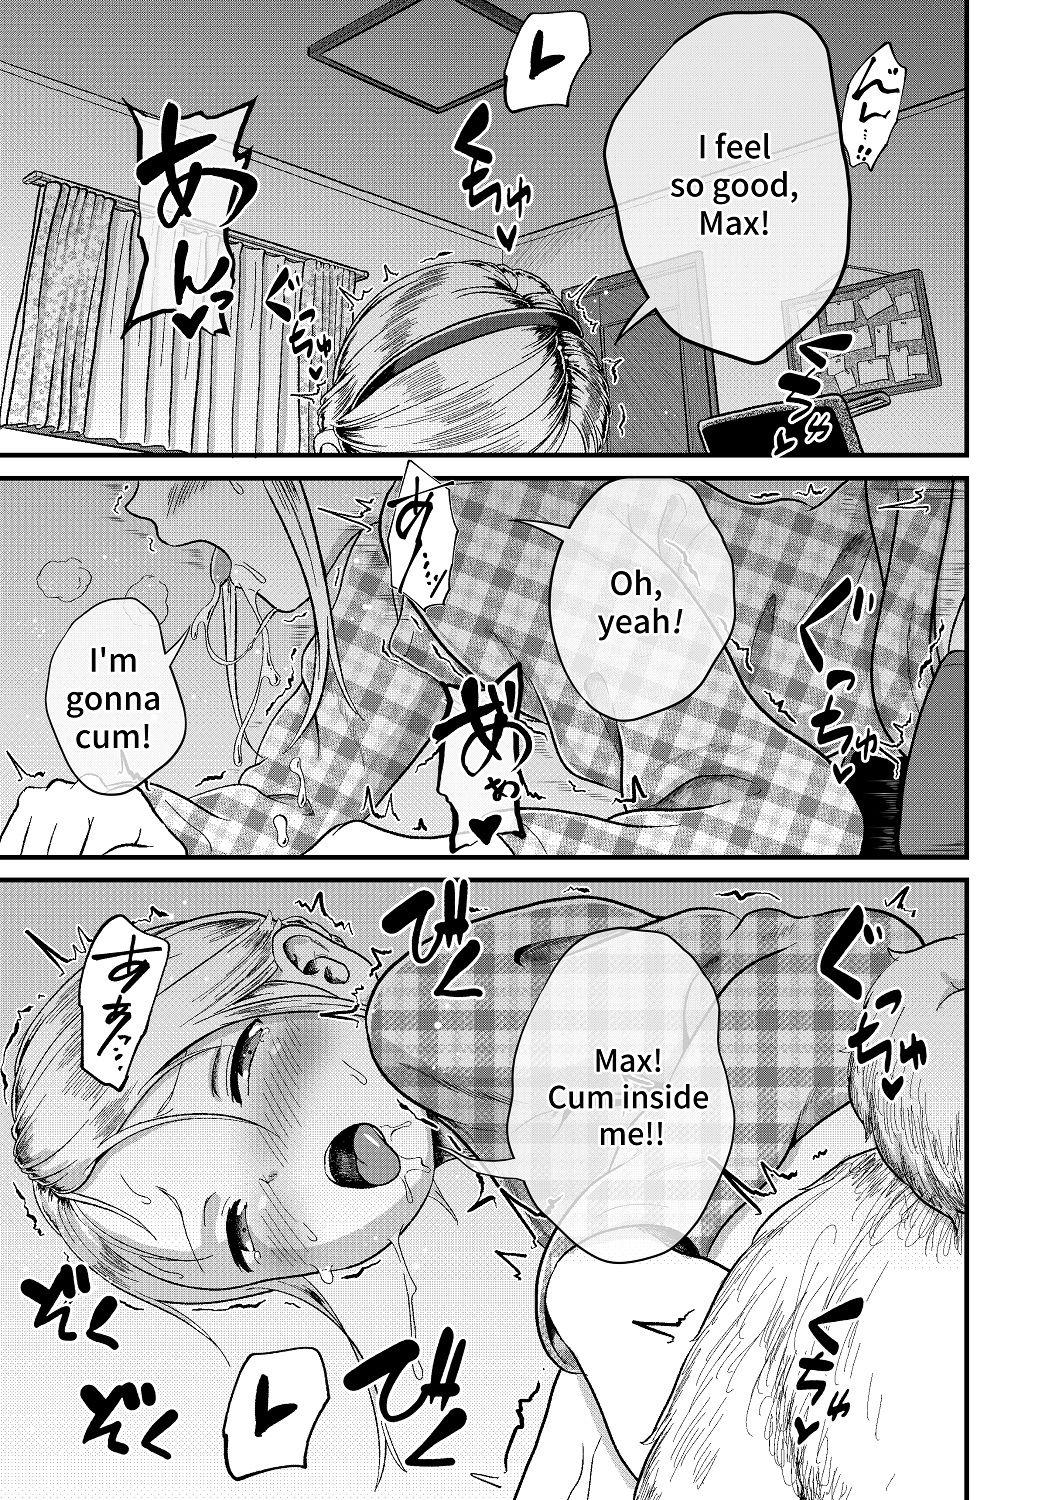 Cumfacial Himitsu no sei katsu - Secret Sexual Activity - Resident evil Strip - Page 1